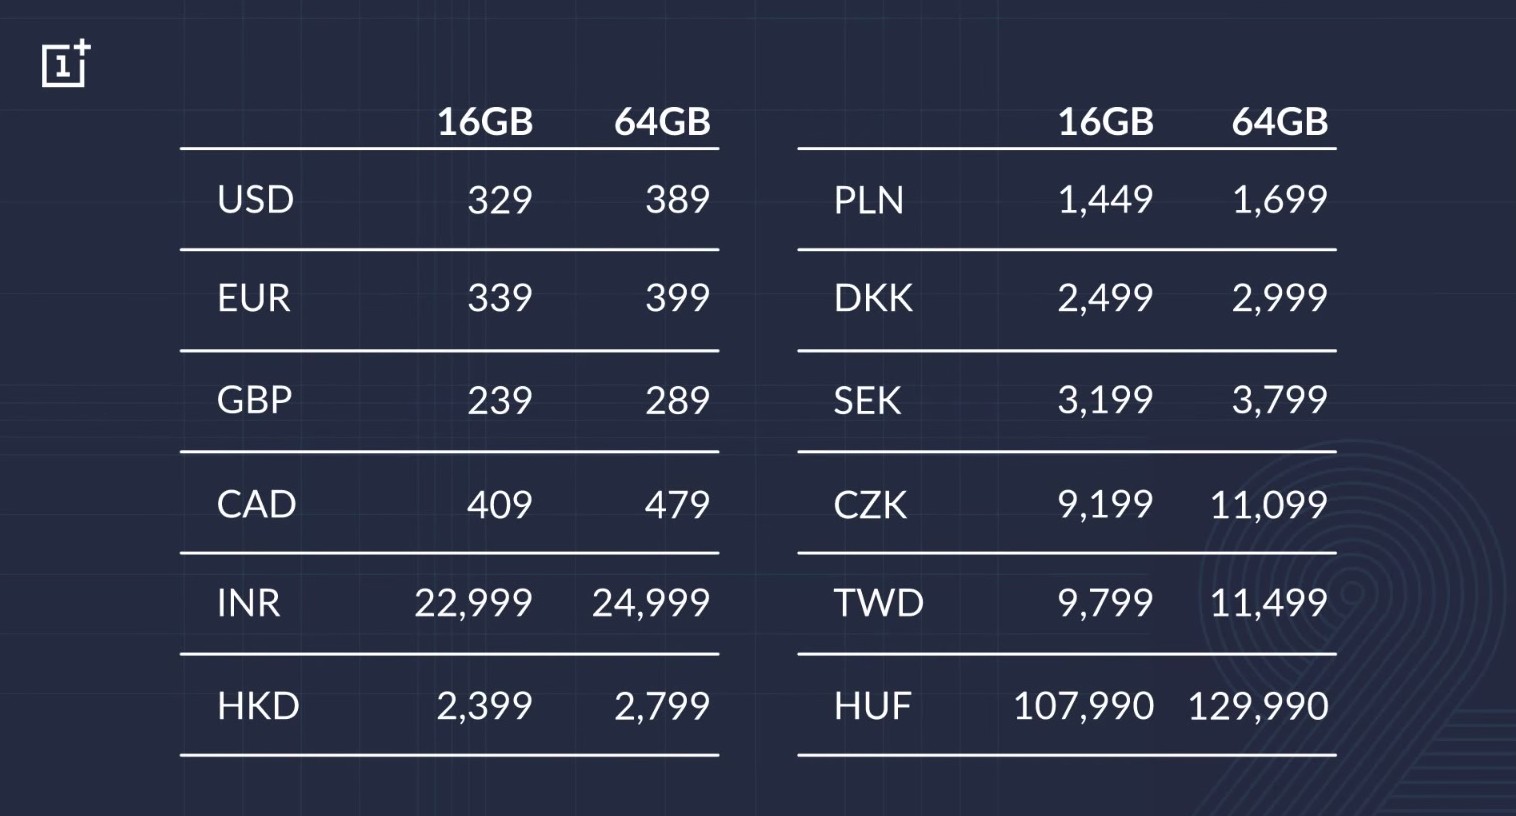 OnePlus 2 regional prices